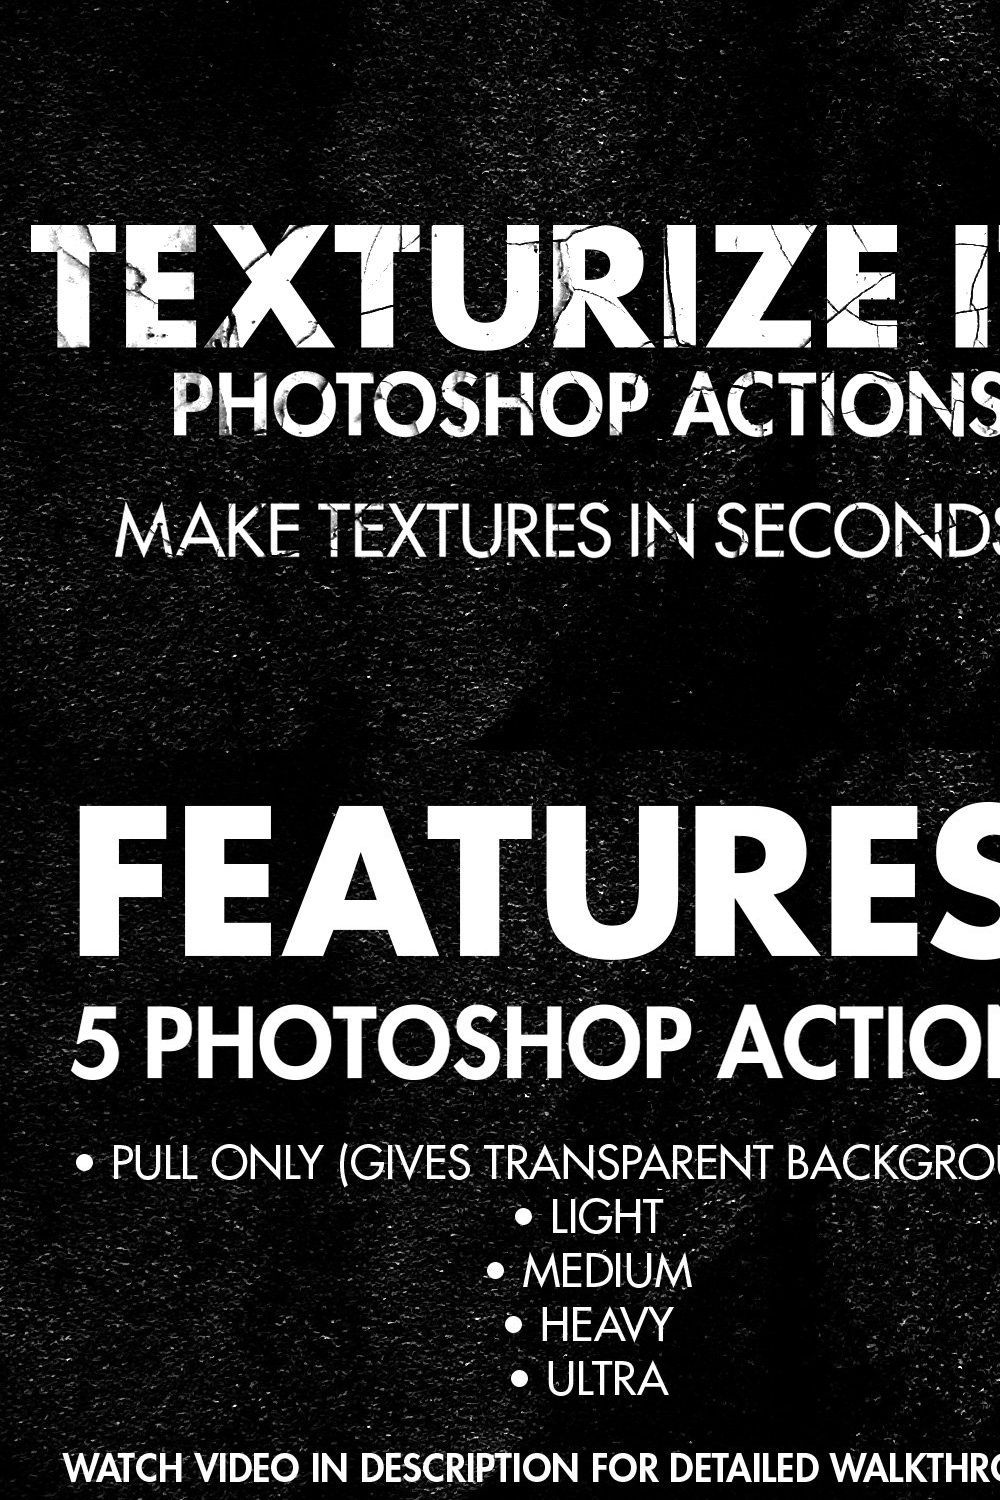 Texturize It! Photoshop Actions pinterest preview image.